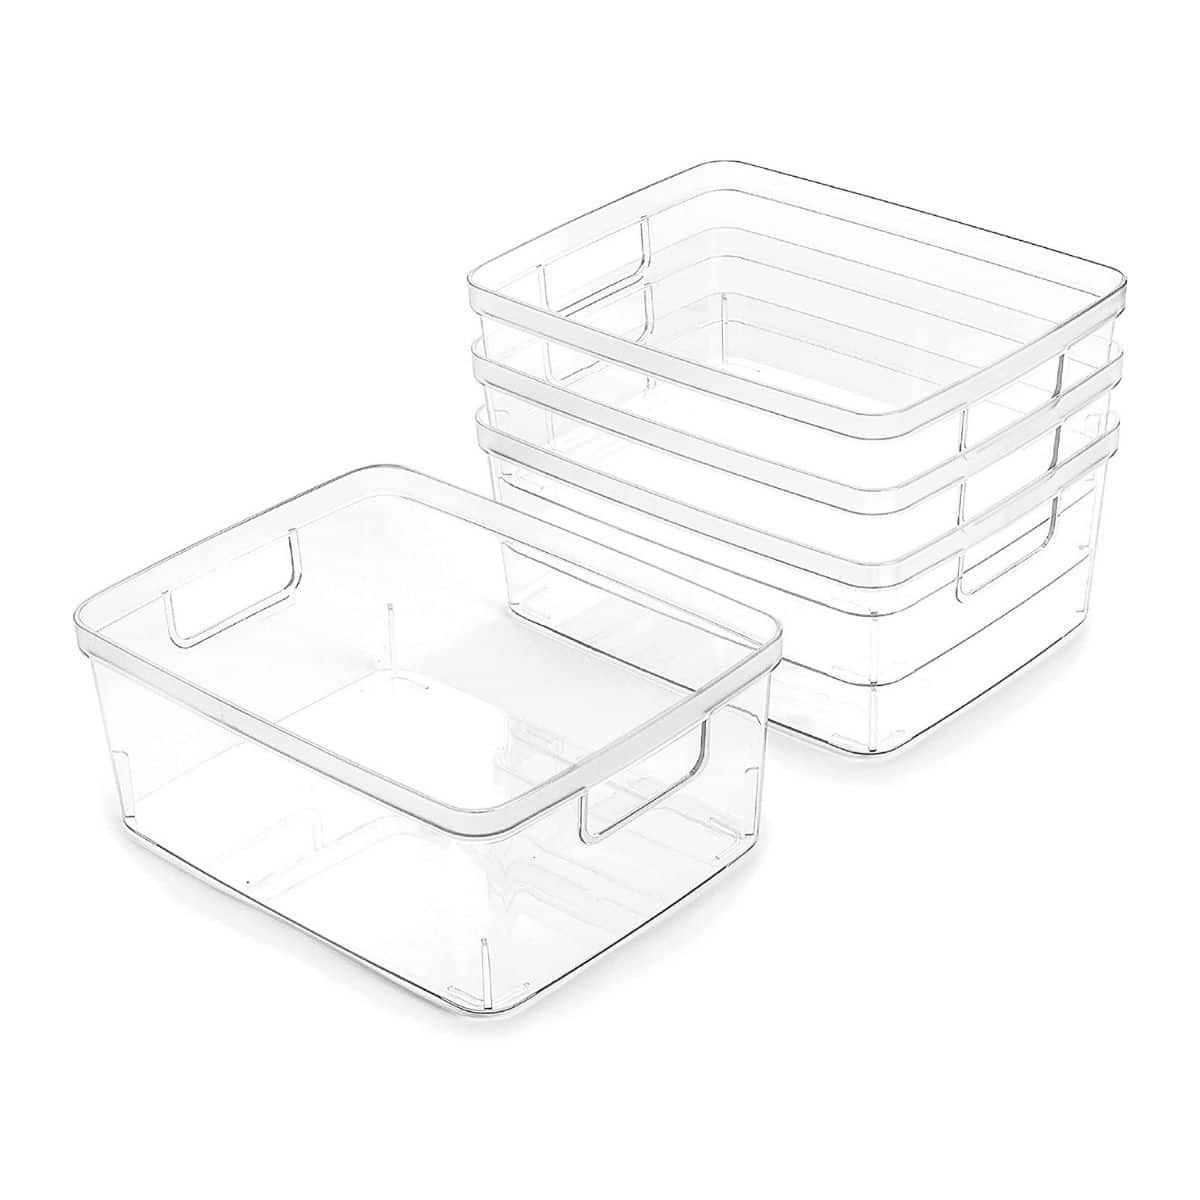 BINO | Plastic Storage Bins, Small - 4 Pack | THE LUCID COLLECTION |  Multi-Use Organizer Bins | Built-In Handles | BPA-Free | Pantry  Organization 